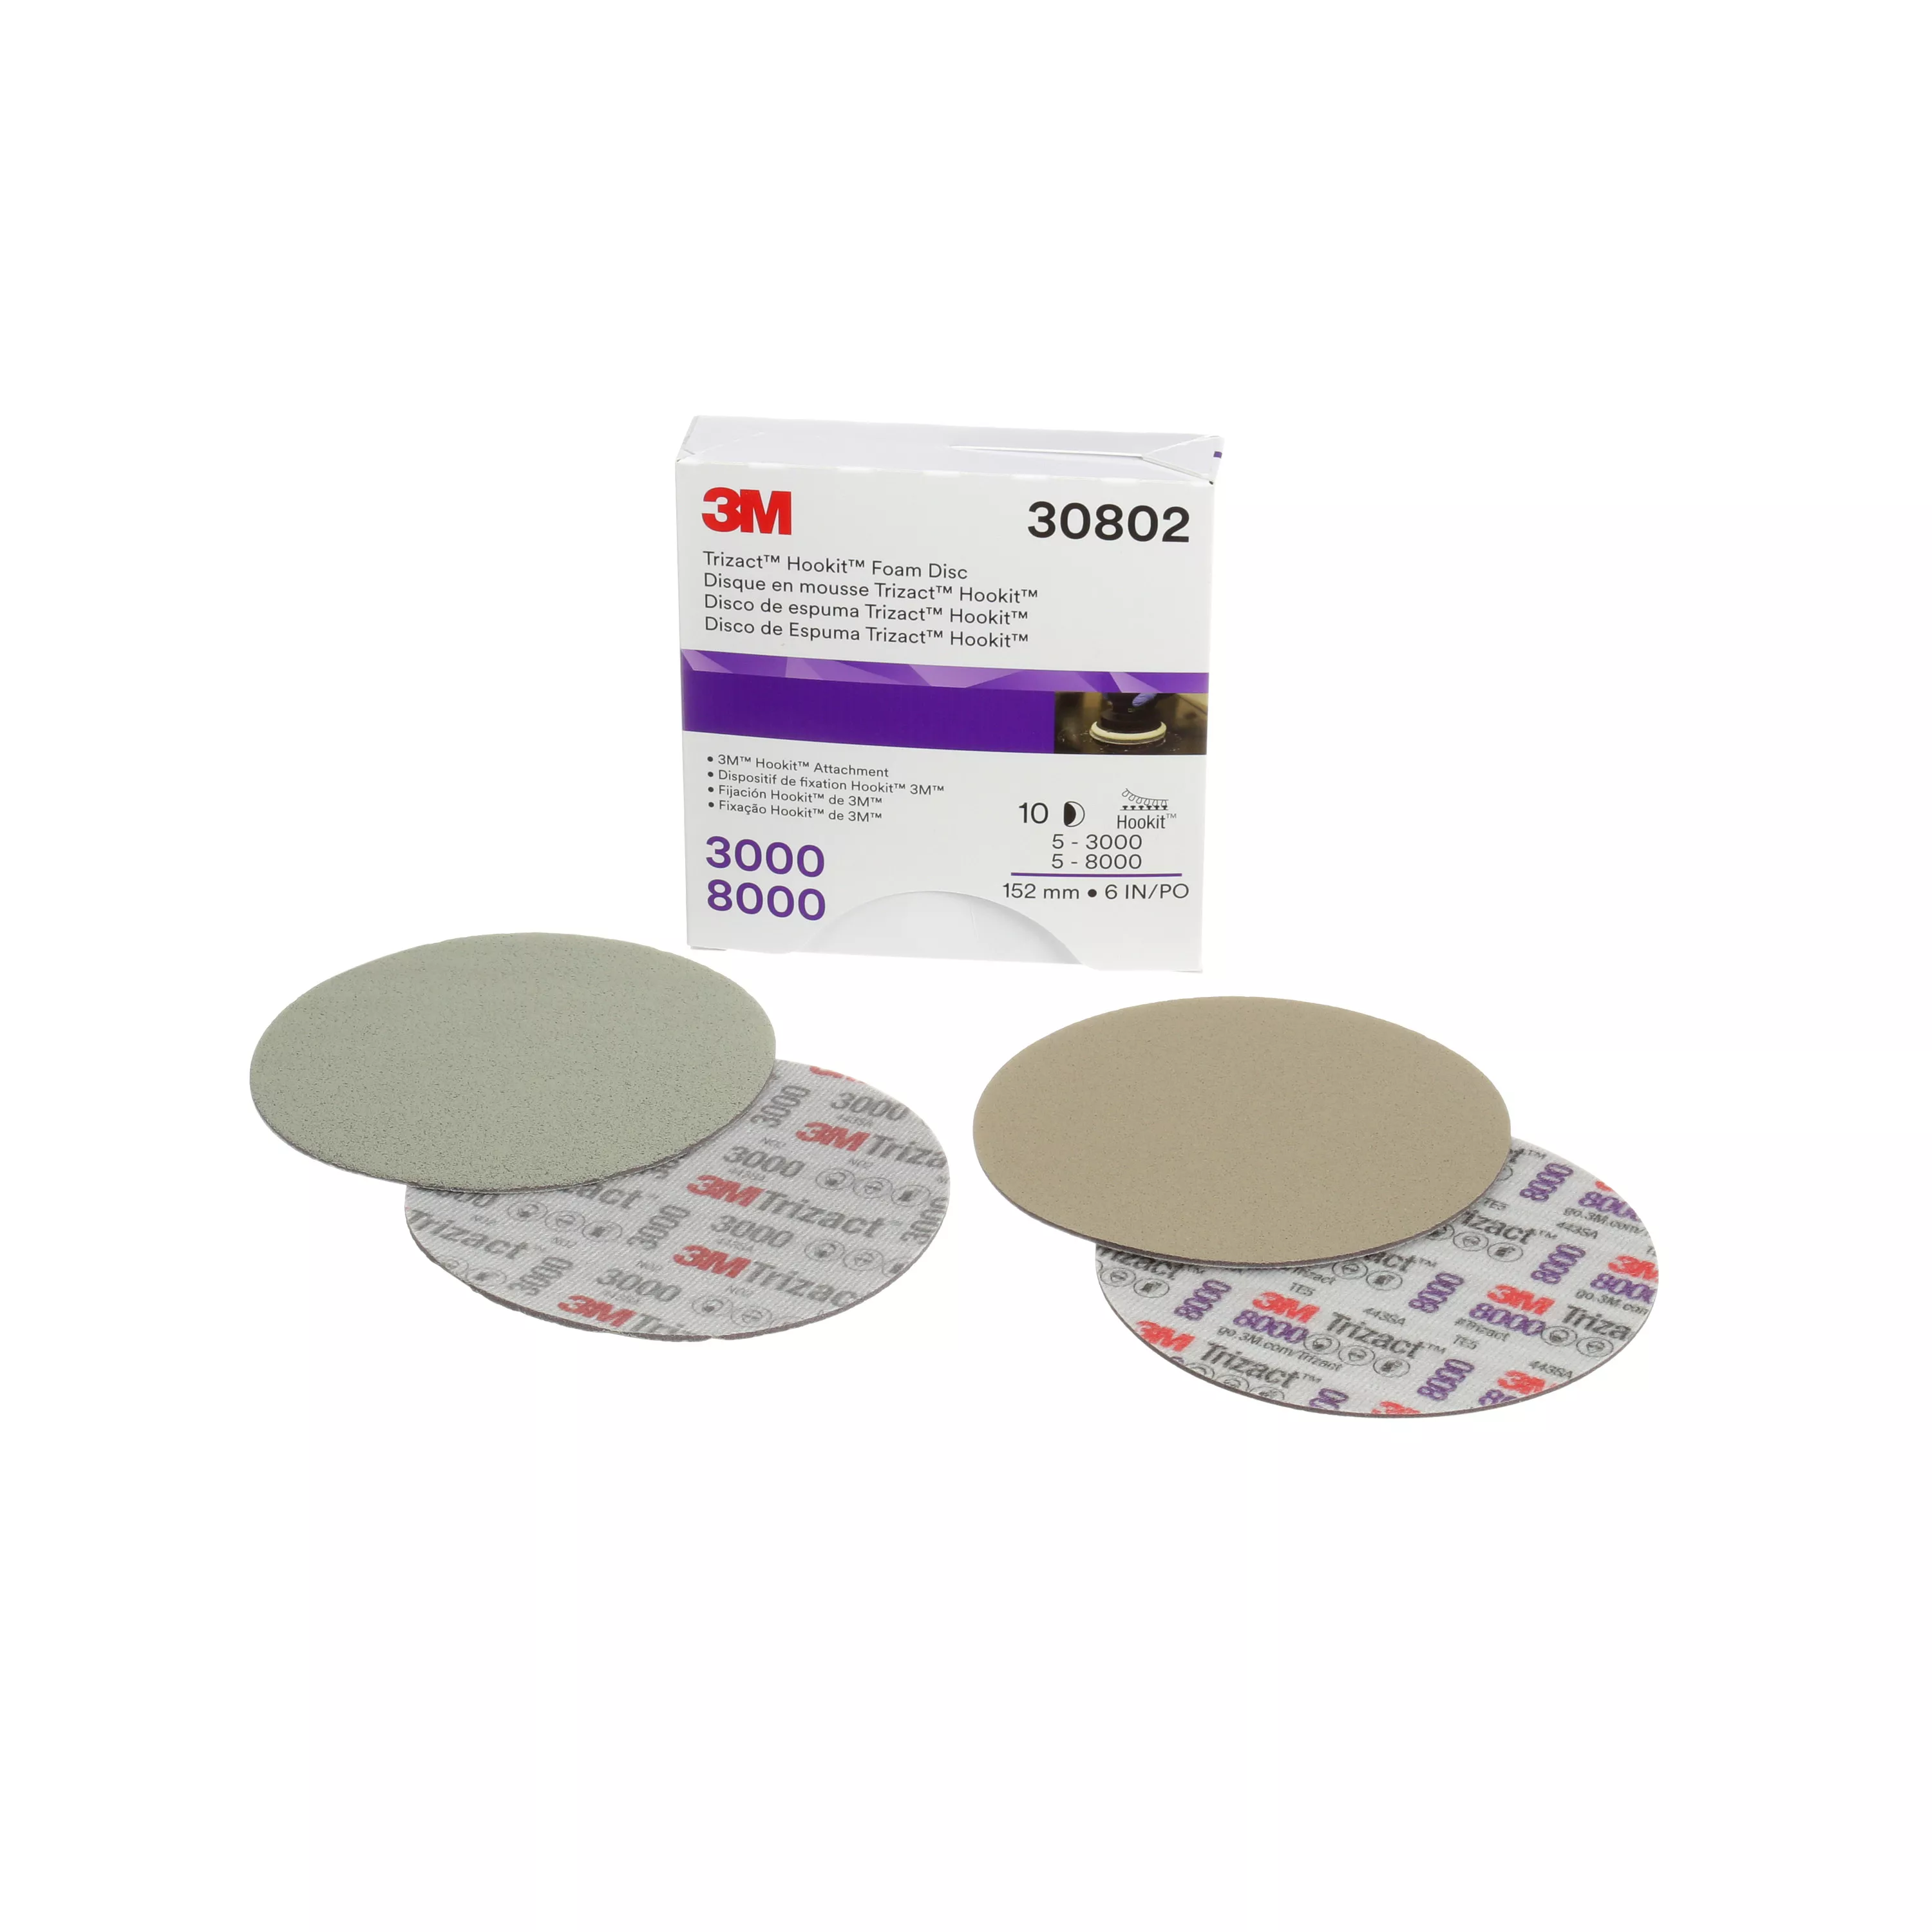 3M™ Trizact™ Hookit™ Foam Disc 30802, Kit, 6 in, 3000 and 8000, 10 Discs/Kit, 4 Kits/Case